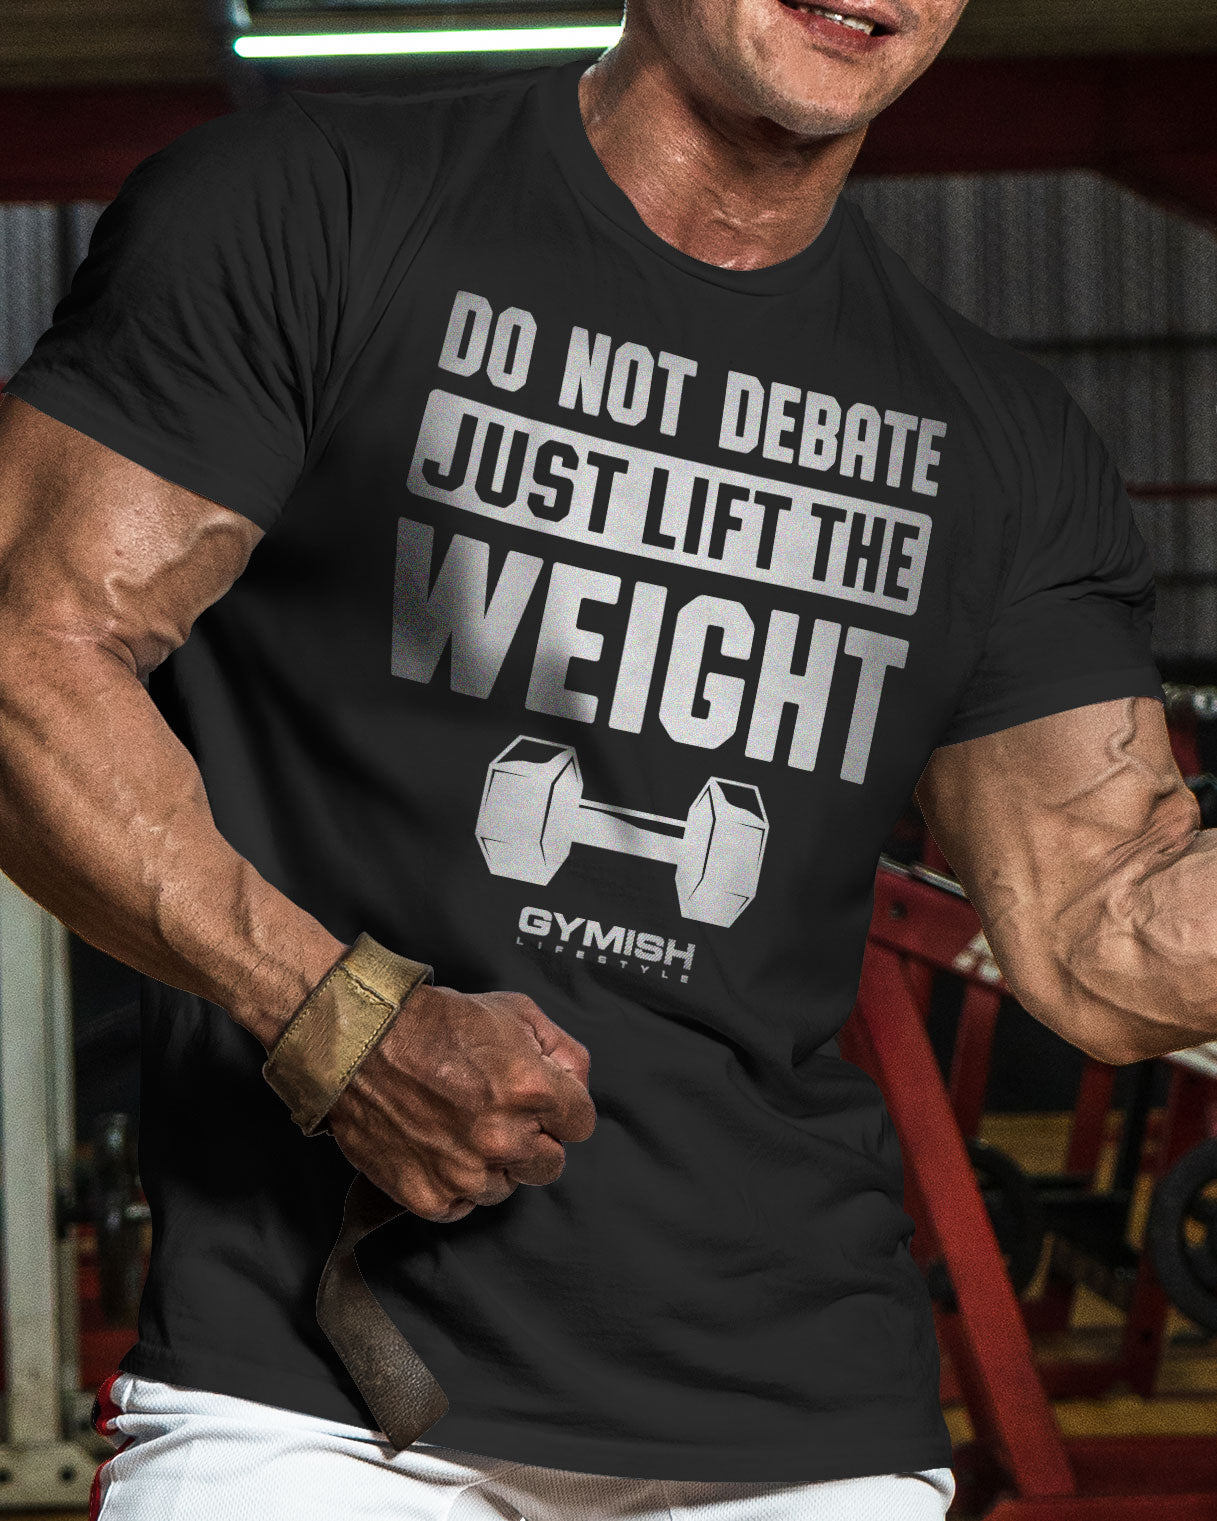 010. Do Not Debate Just Lift The Weight Gym T-Shirt